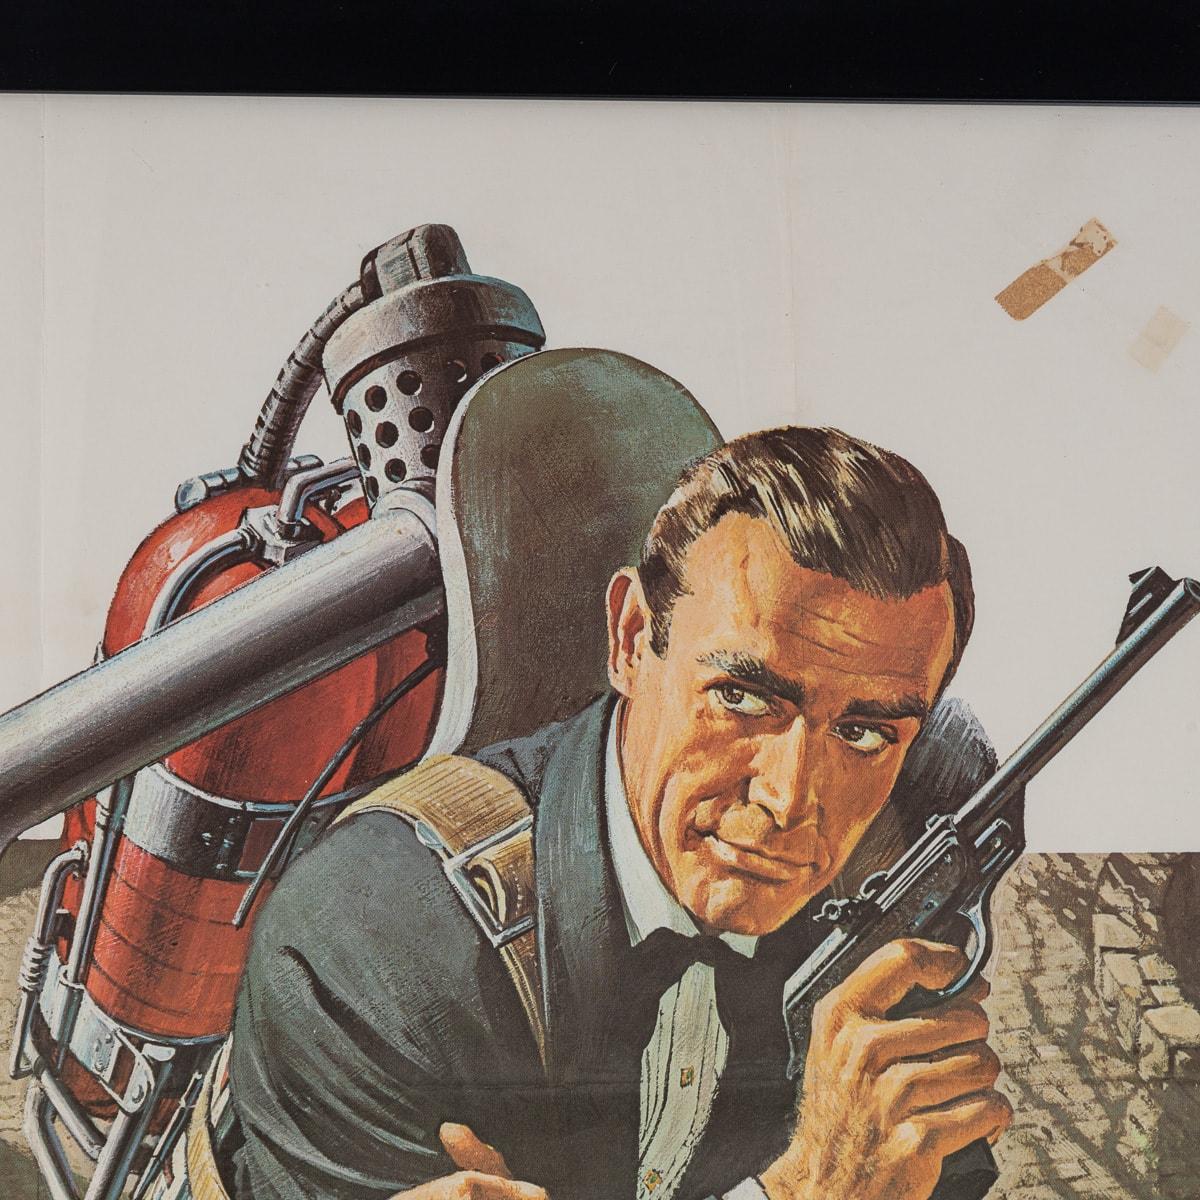 Other Original U.S James Bond 007 'Thunderball' Poster c.1965 For Sale